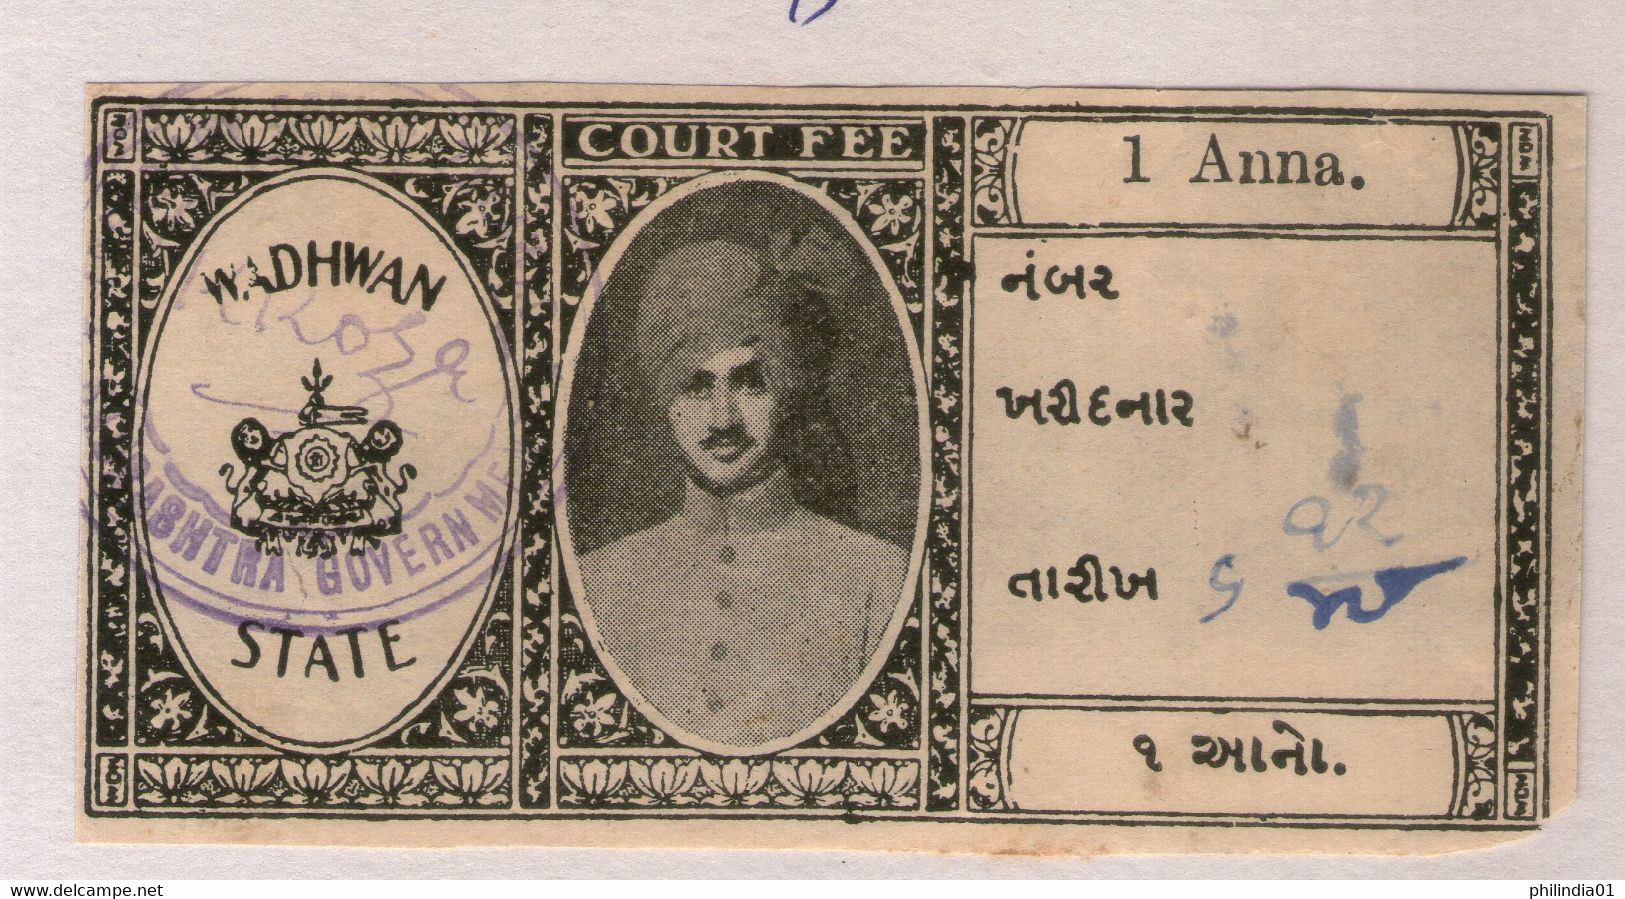 India Fiscal Wadhwan State 1An King Type 16 KM 161 Court Fee Stamp # 568 - Wadhwan